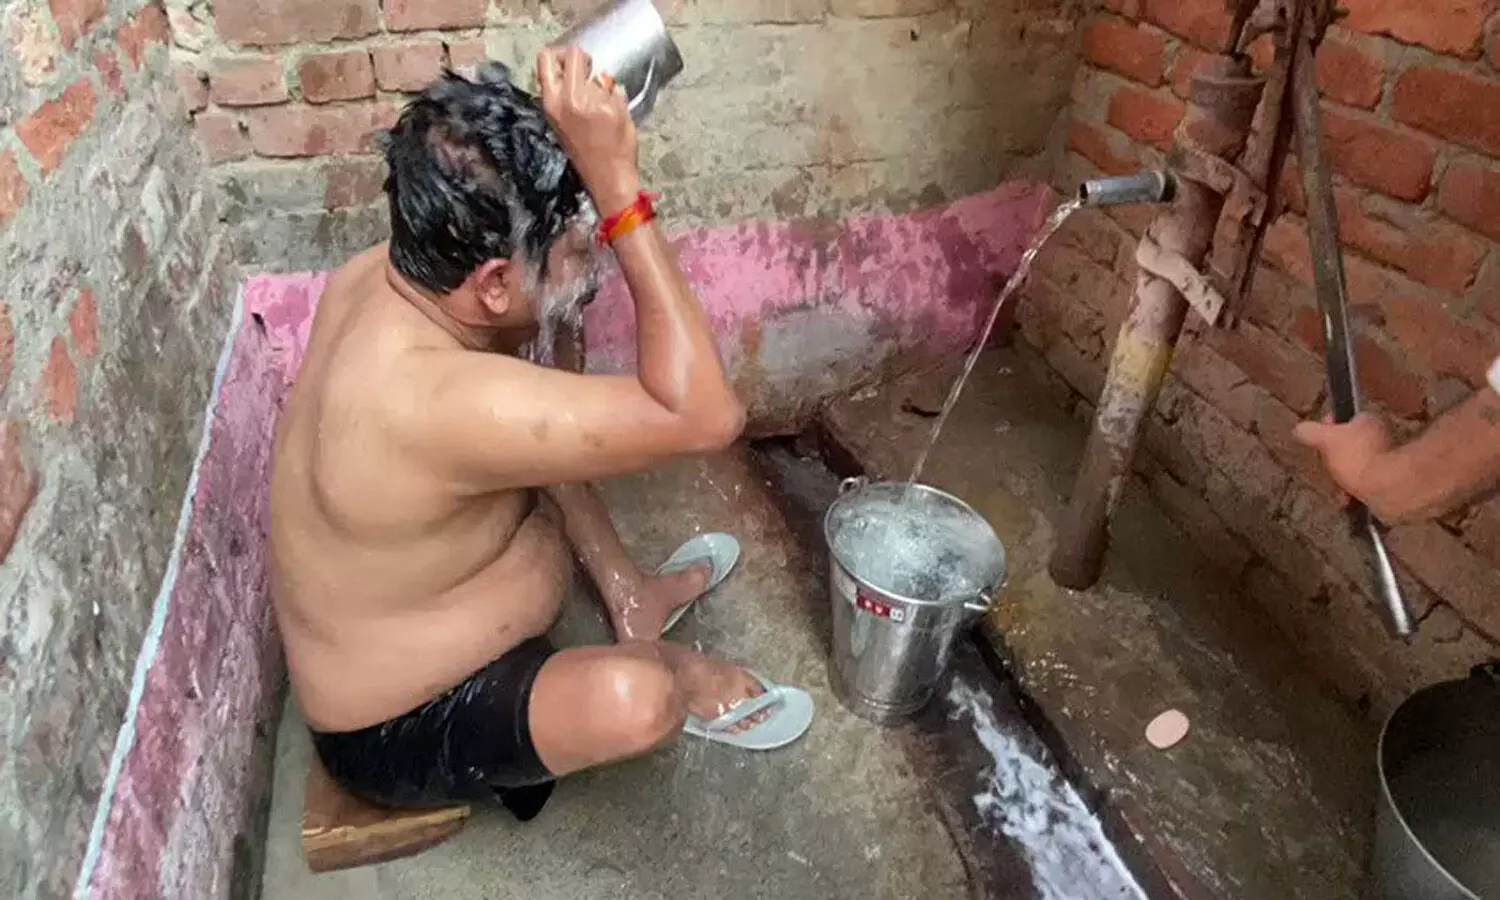 No VIP culture in Uttar Pradesh: Minister Nandi takes bath at villagers house, shares video